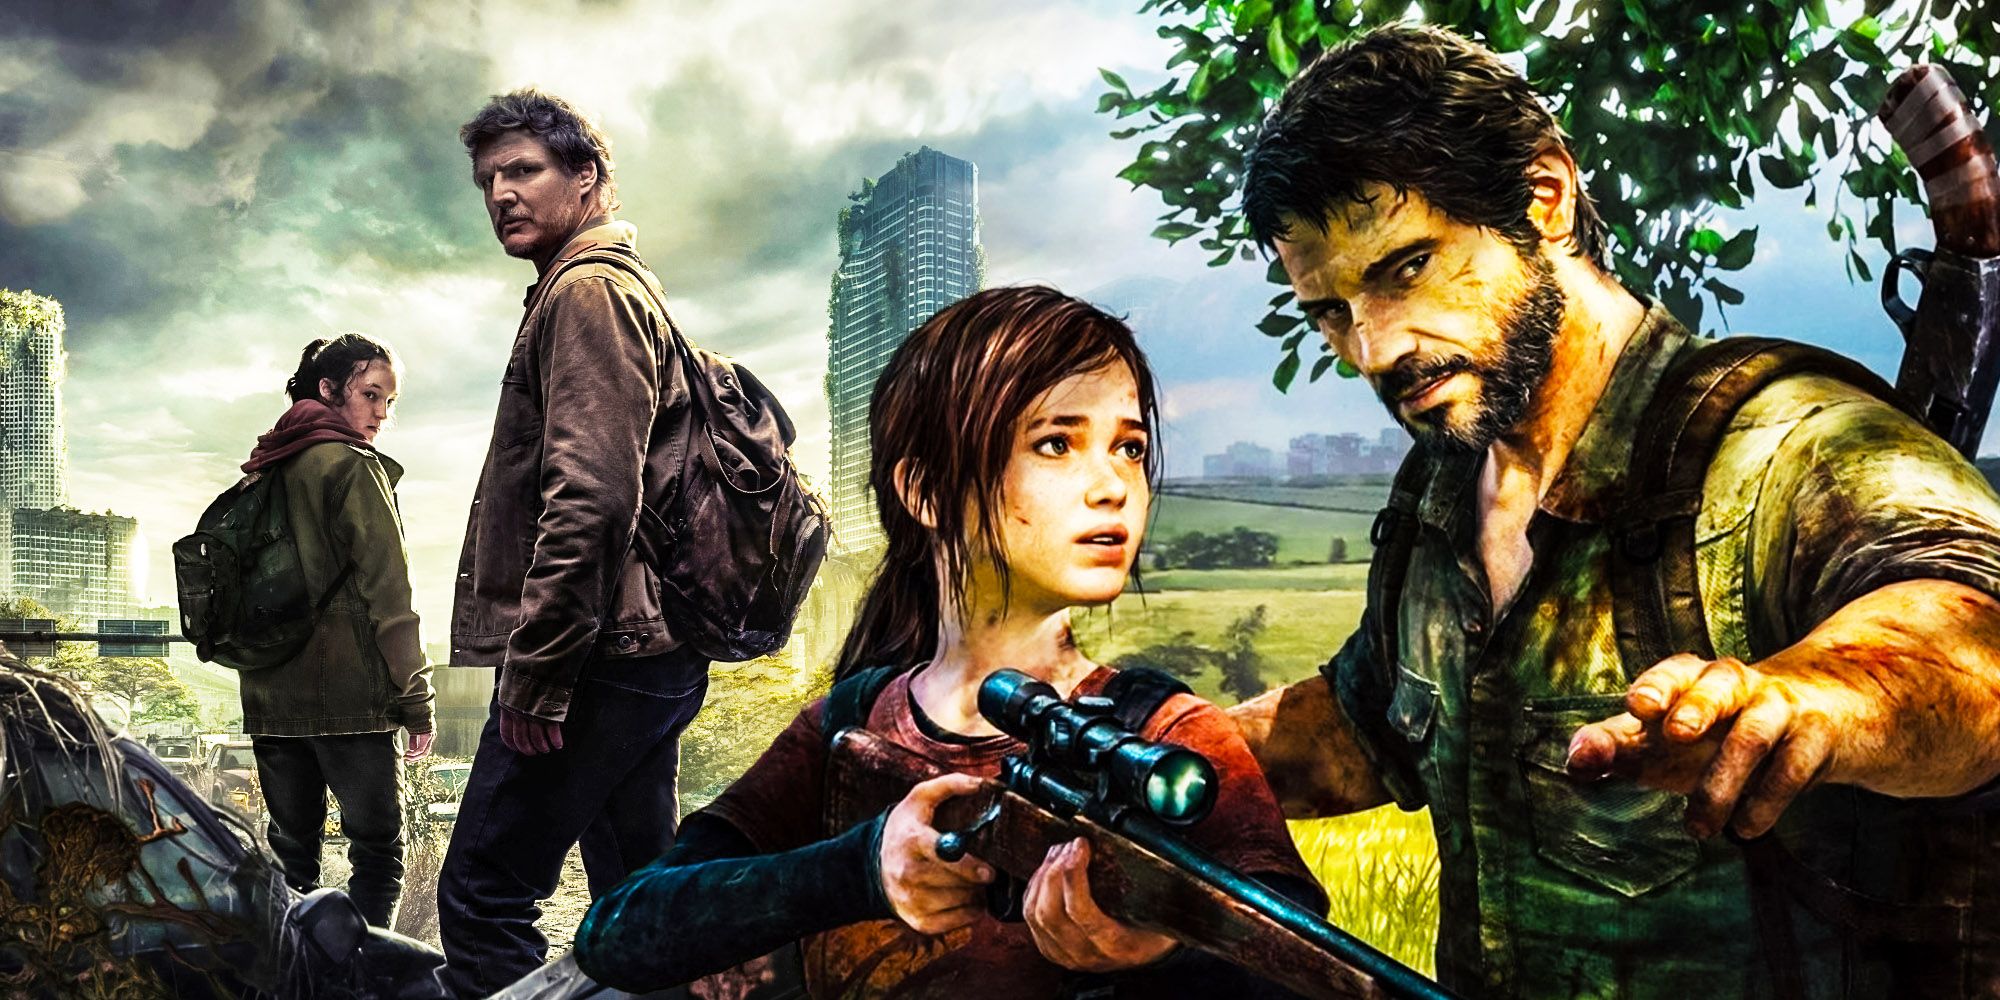 Ellie and Joel - The Last of Us [3] wallpaper - Game wallpapers - #20907